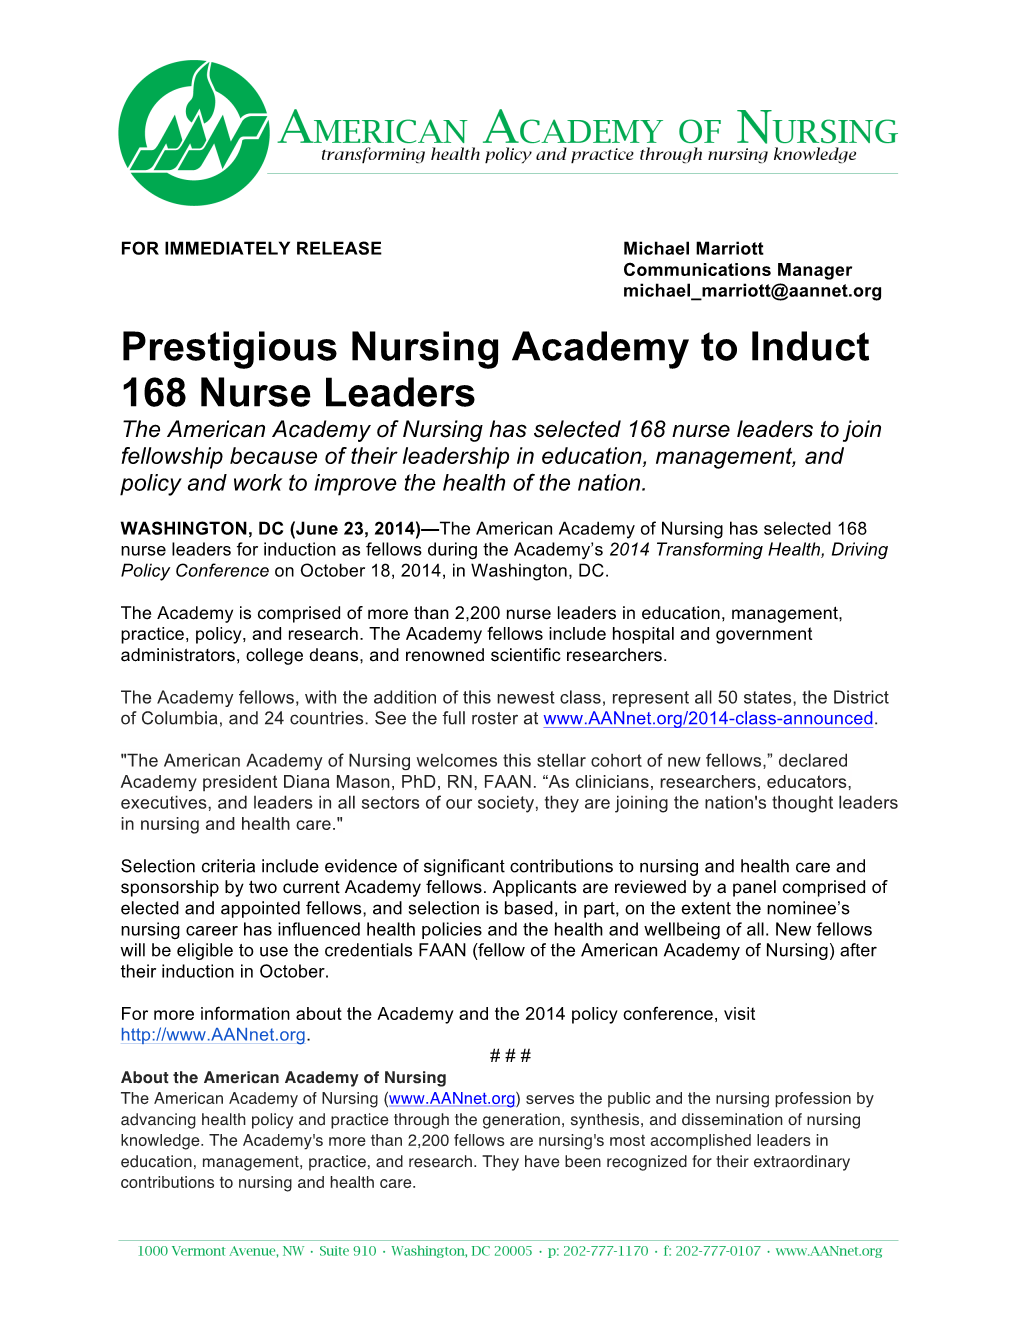 Prestigious Nursing Academy to Induct 168 Nurse Leaders